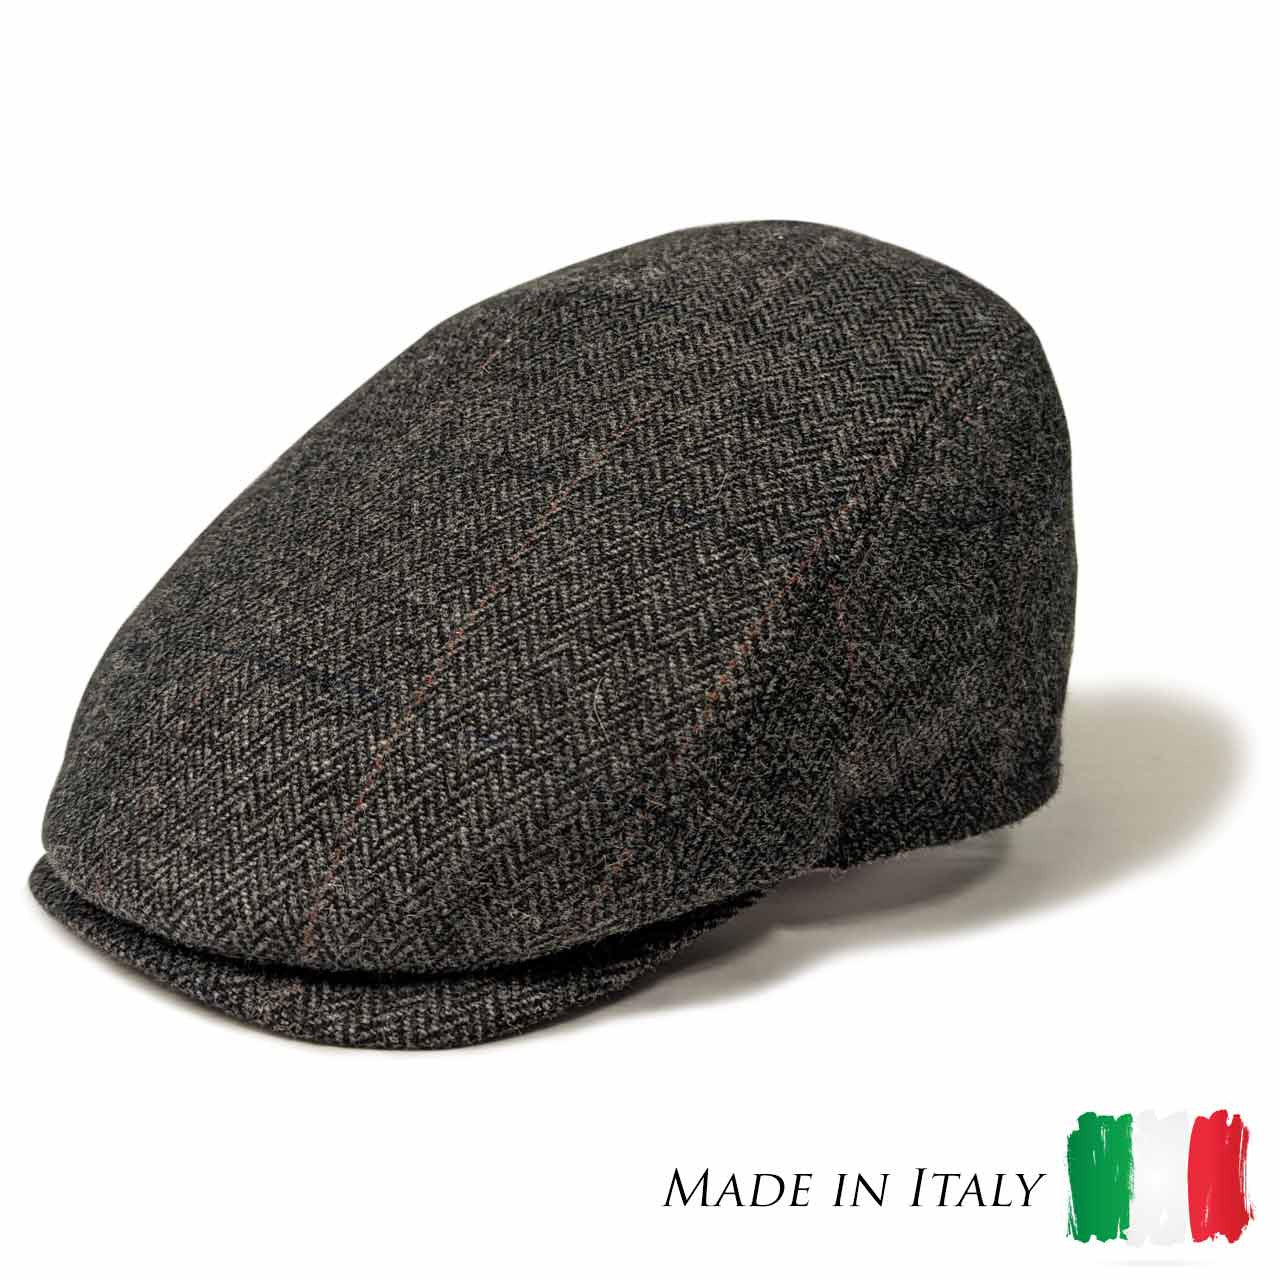 Saint Martin - Bang Art Wool Driving Cap - Style made in Italy